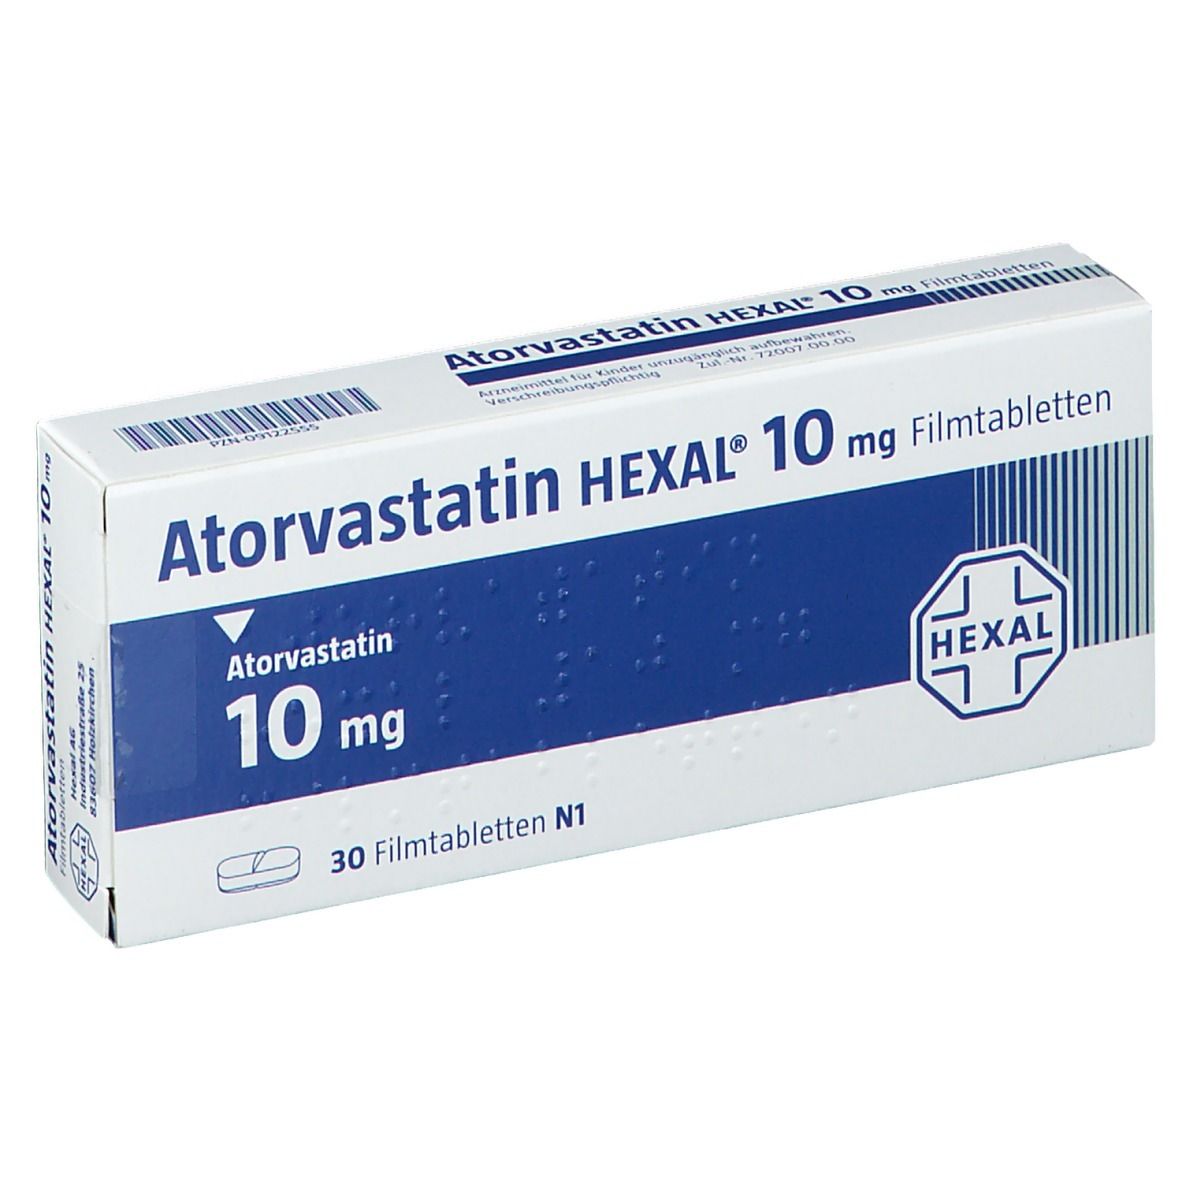 Atorvastatin HEXAL® 10 mg